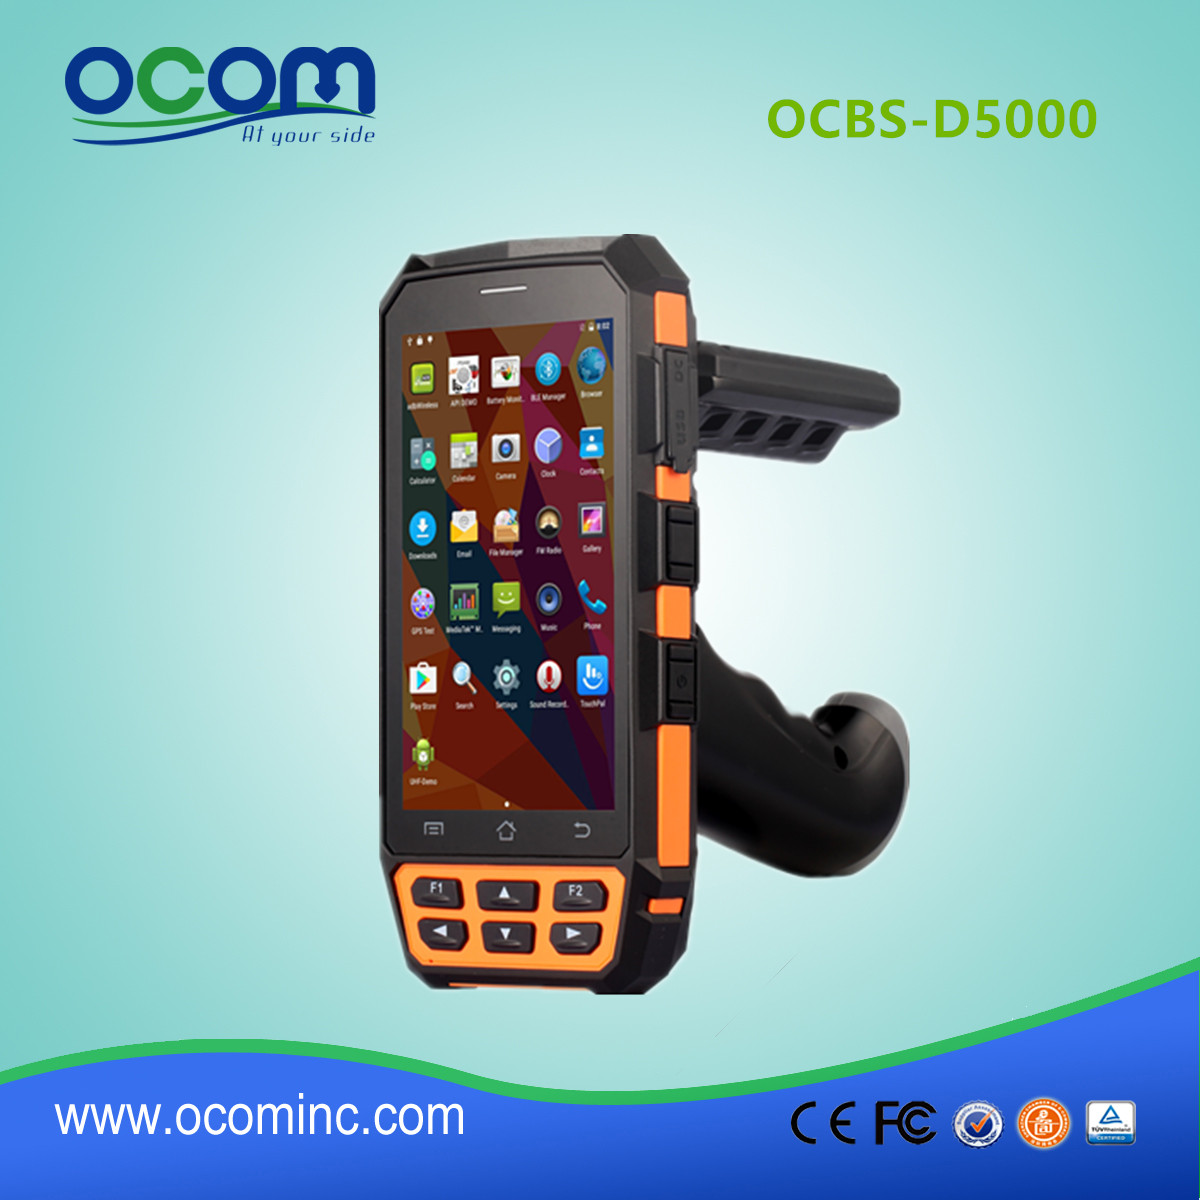 OCBS -D5000 corriere qr code scanner android pda con impugnatura a pistola